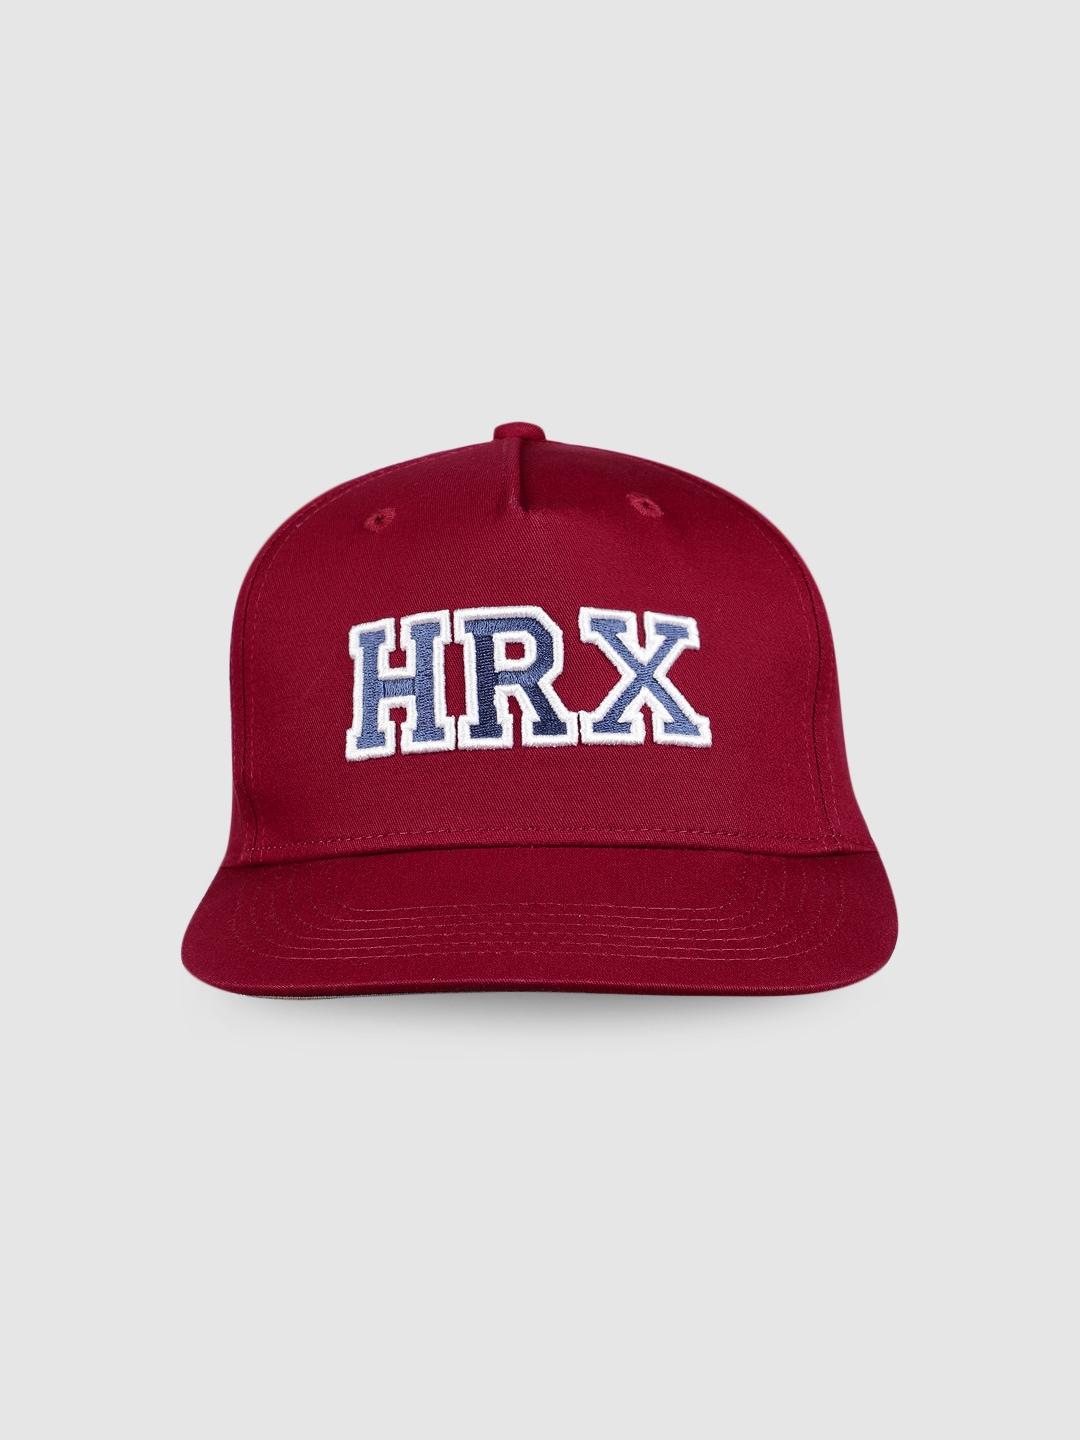 hrx-by-hrithik-roshan-unisex-maroon-snapback-cap